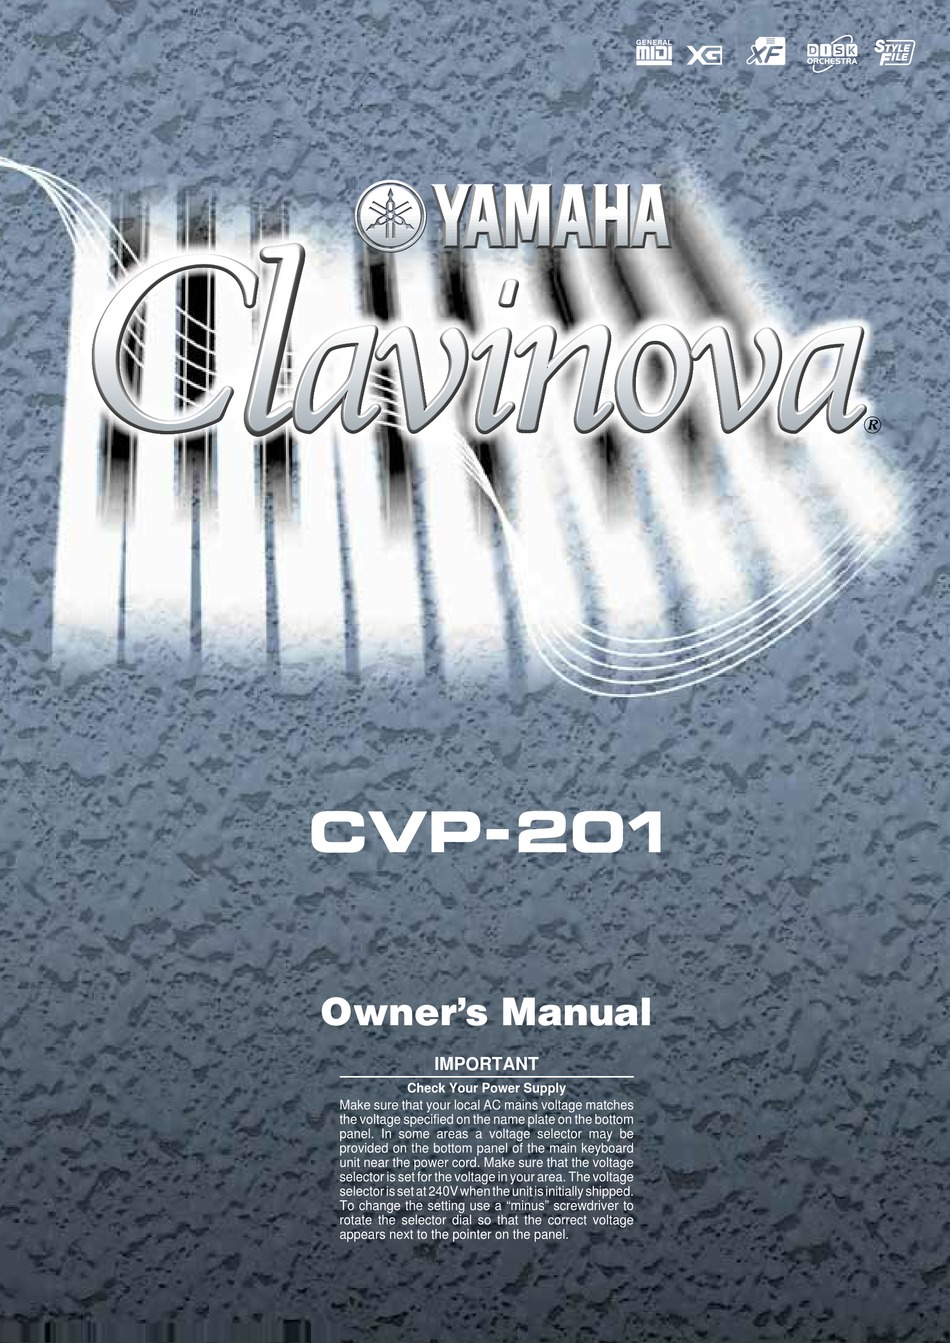 YAMAHA CLAVINOVA CVP-201 OWNER'S MANUAL Pdf Download | ManualsLib